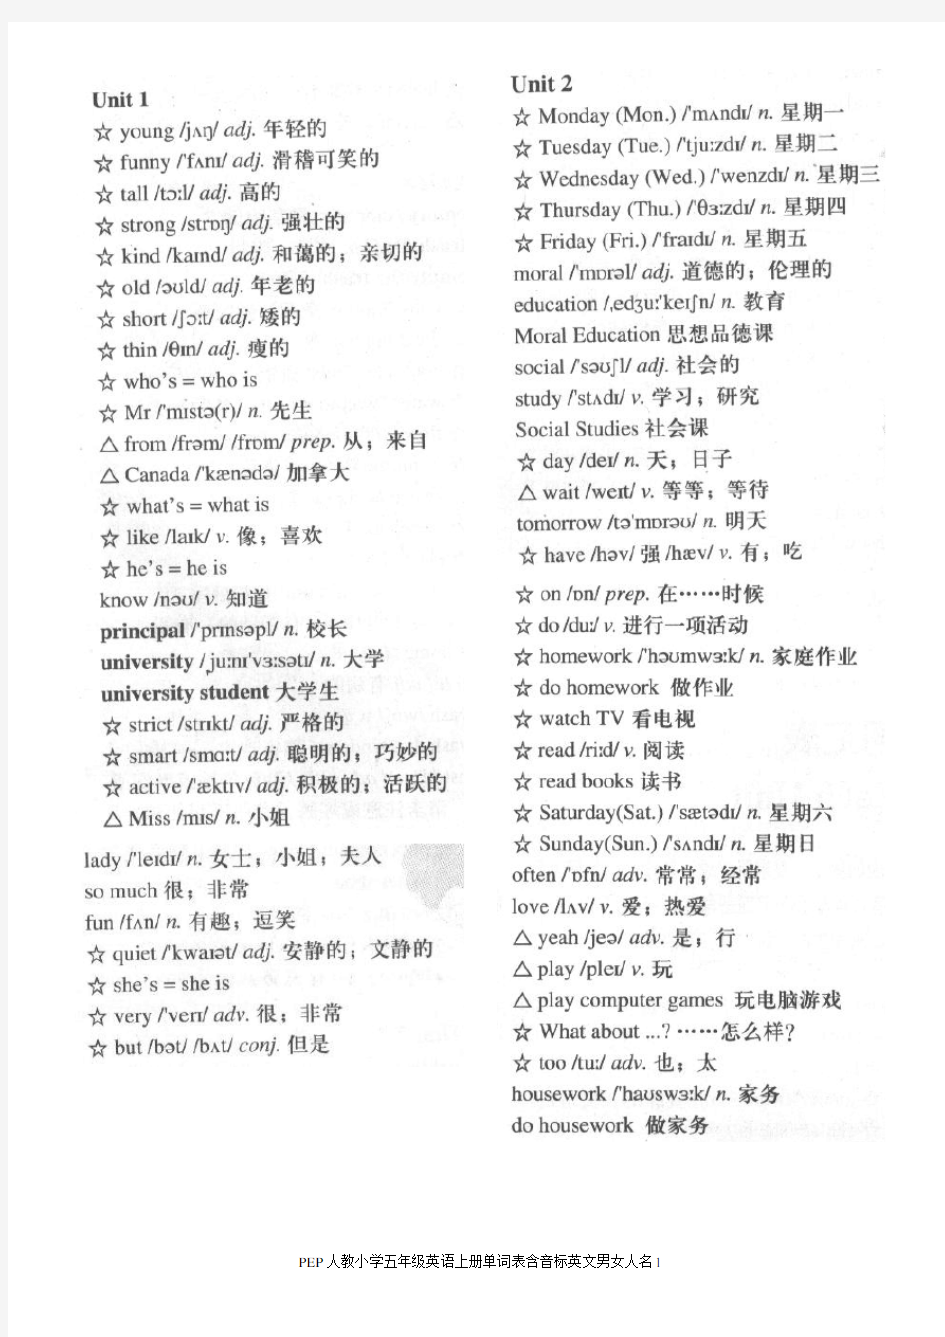 PEP人教版五年级英语上册单词表